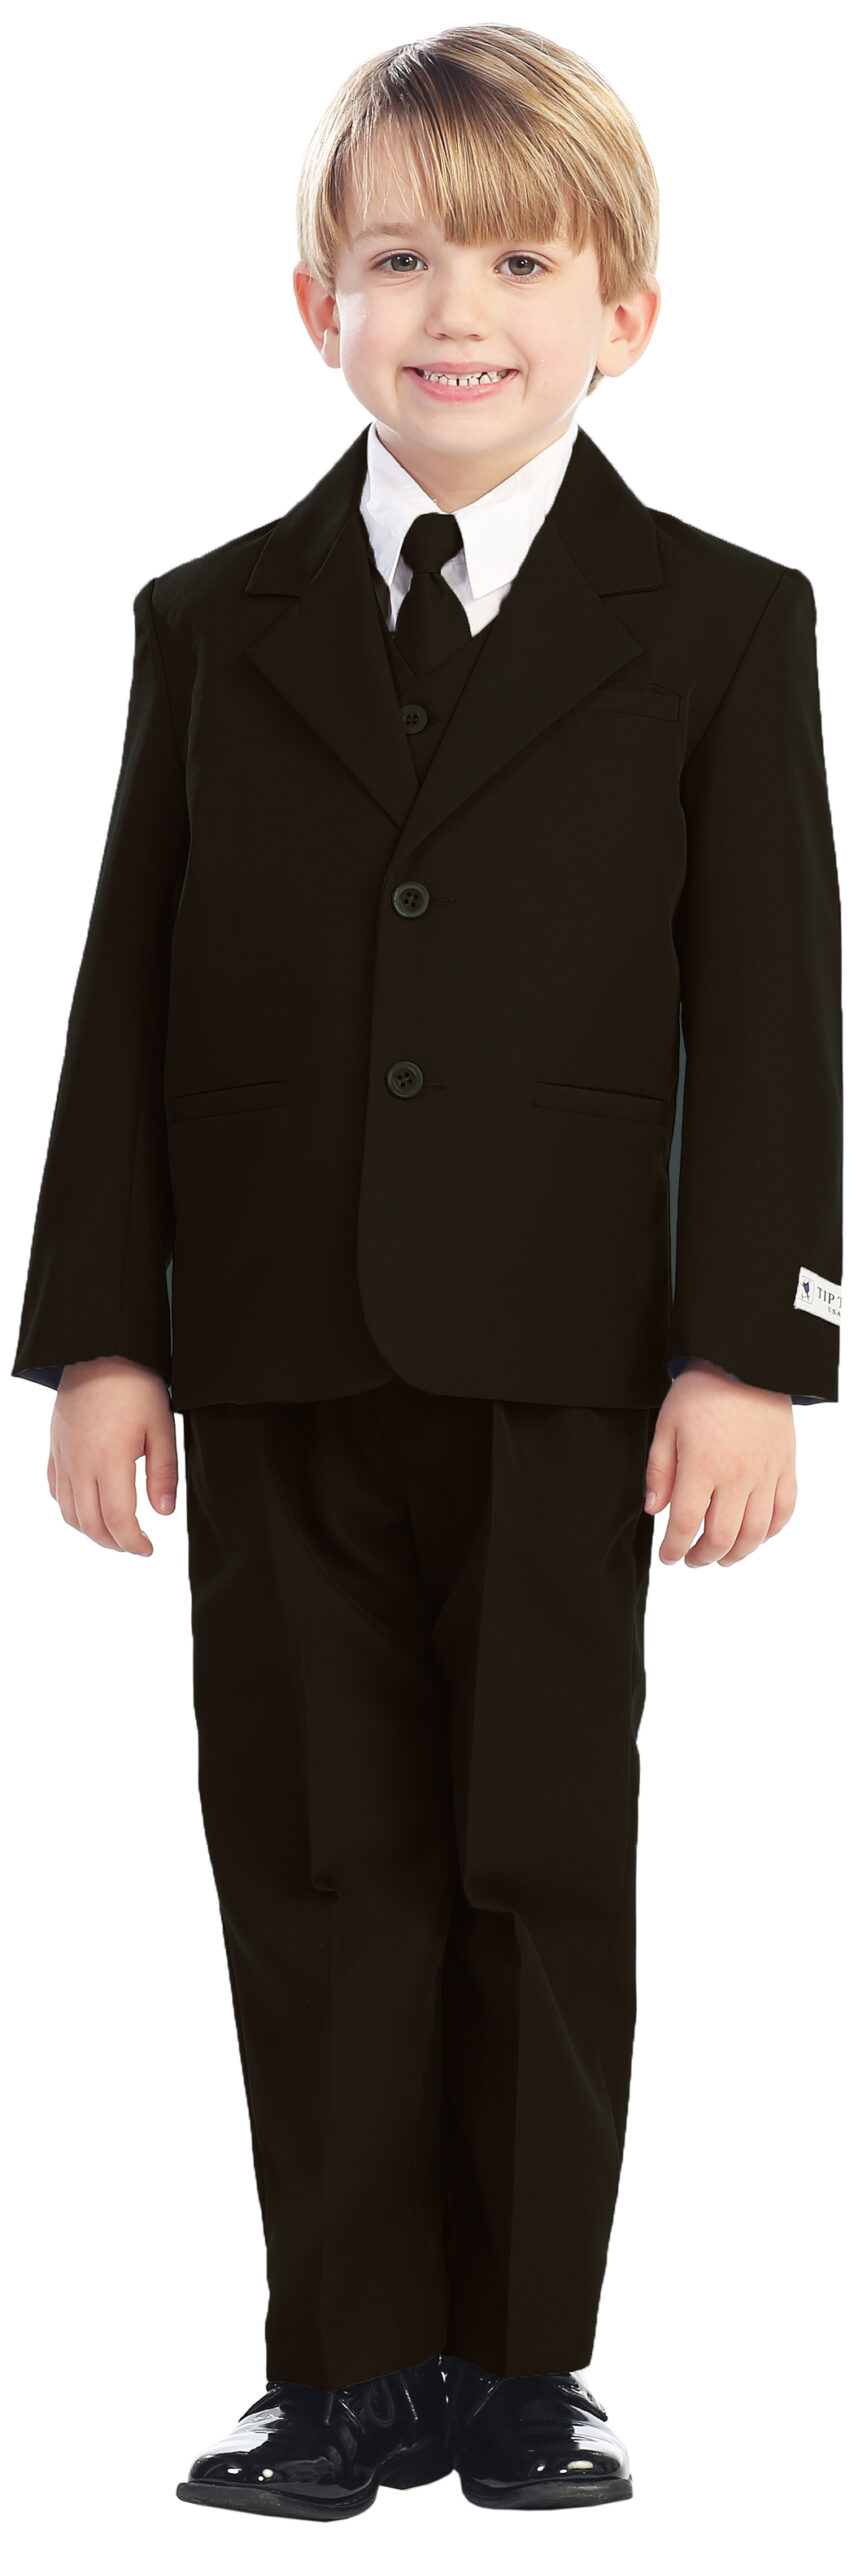 Avery Hill 5-Piece Boy's 2-Button Dress Suit Full-Back Vest - Brown Size 12